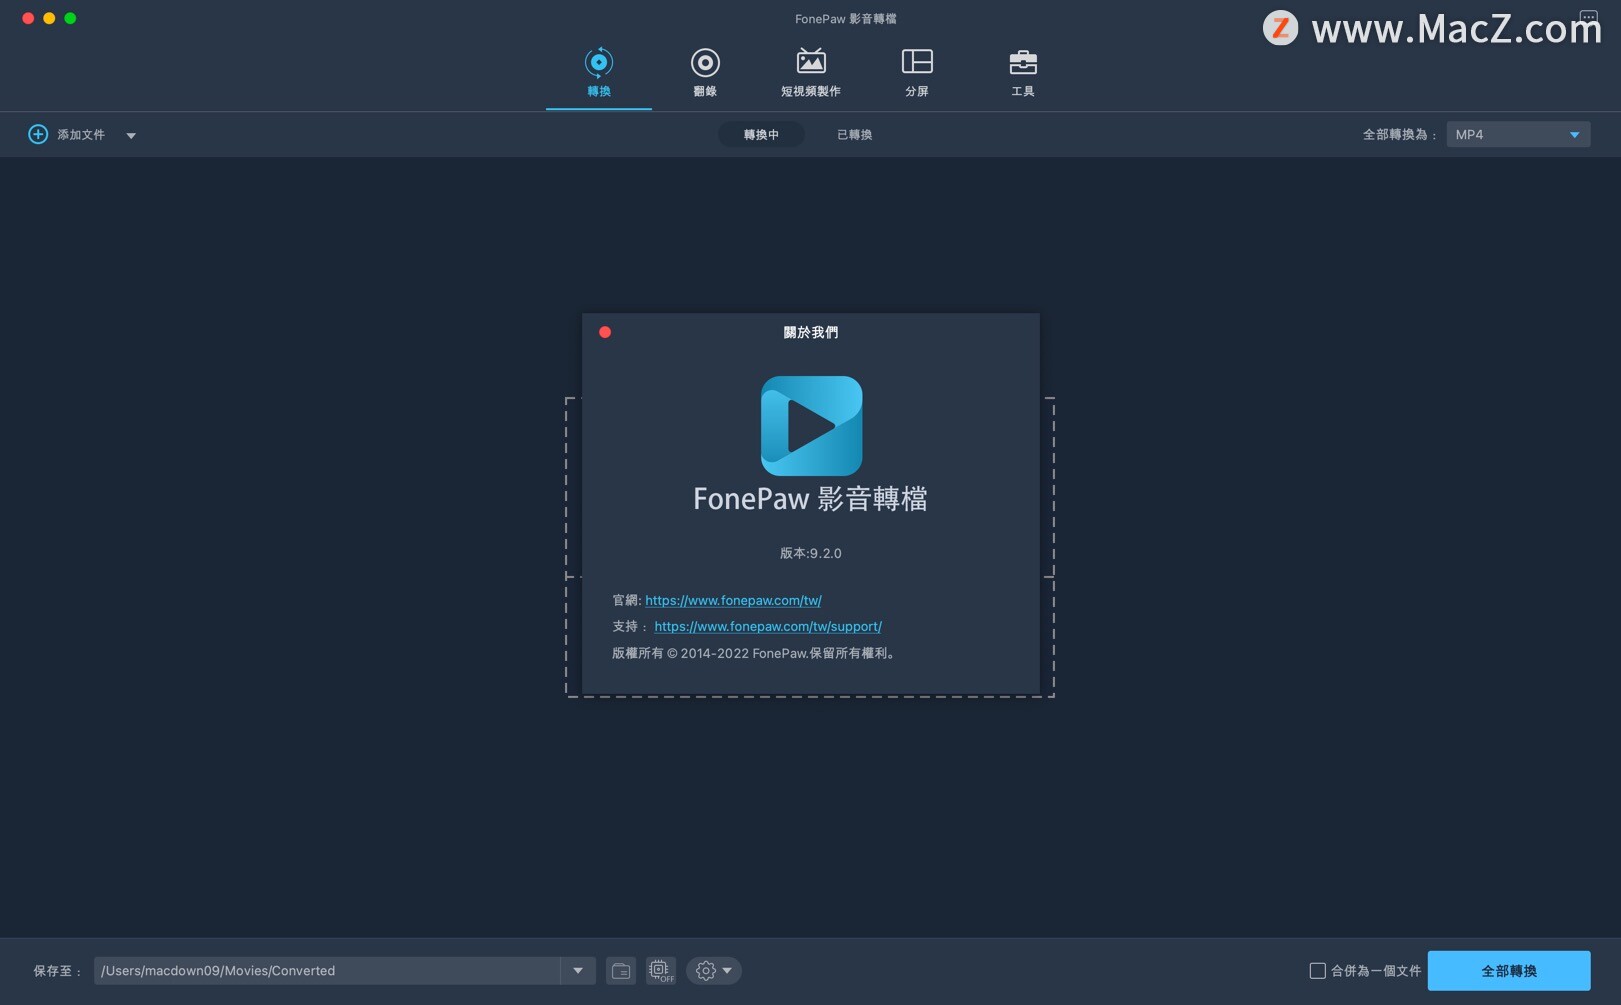 FonePaw Video Converter Ultimate 8.2 instal